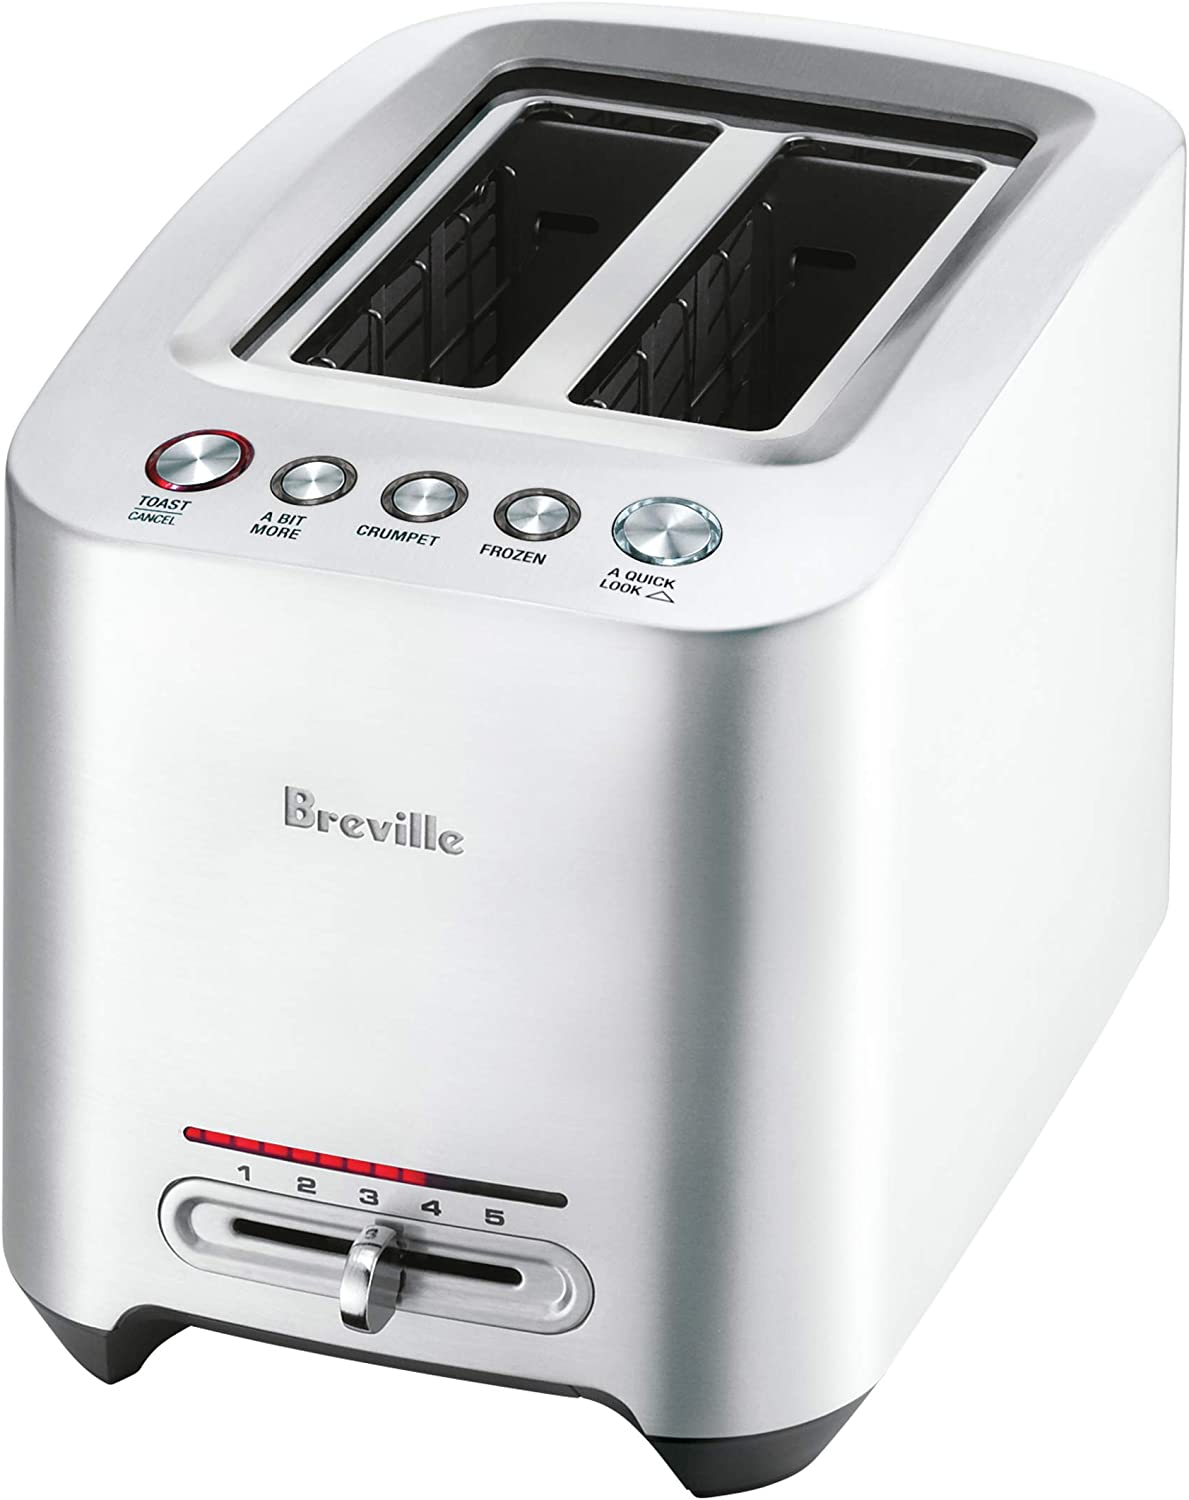 Breville -- the Bit More toasters BTA720XL, BTA730XL